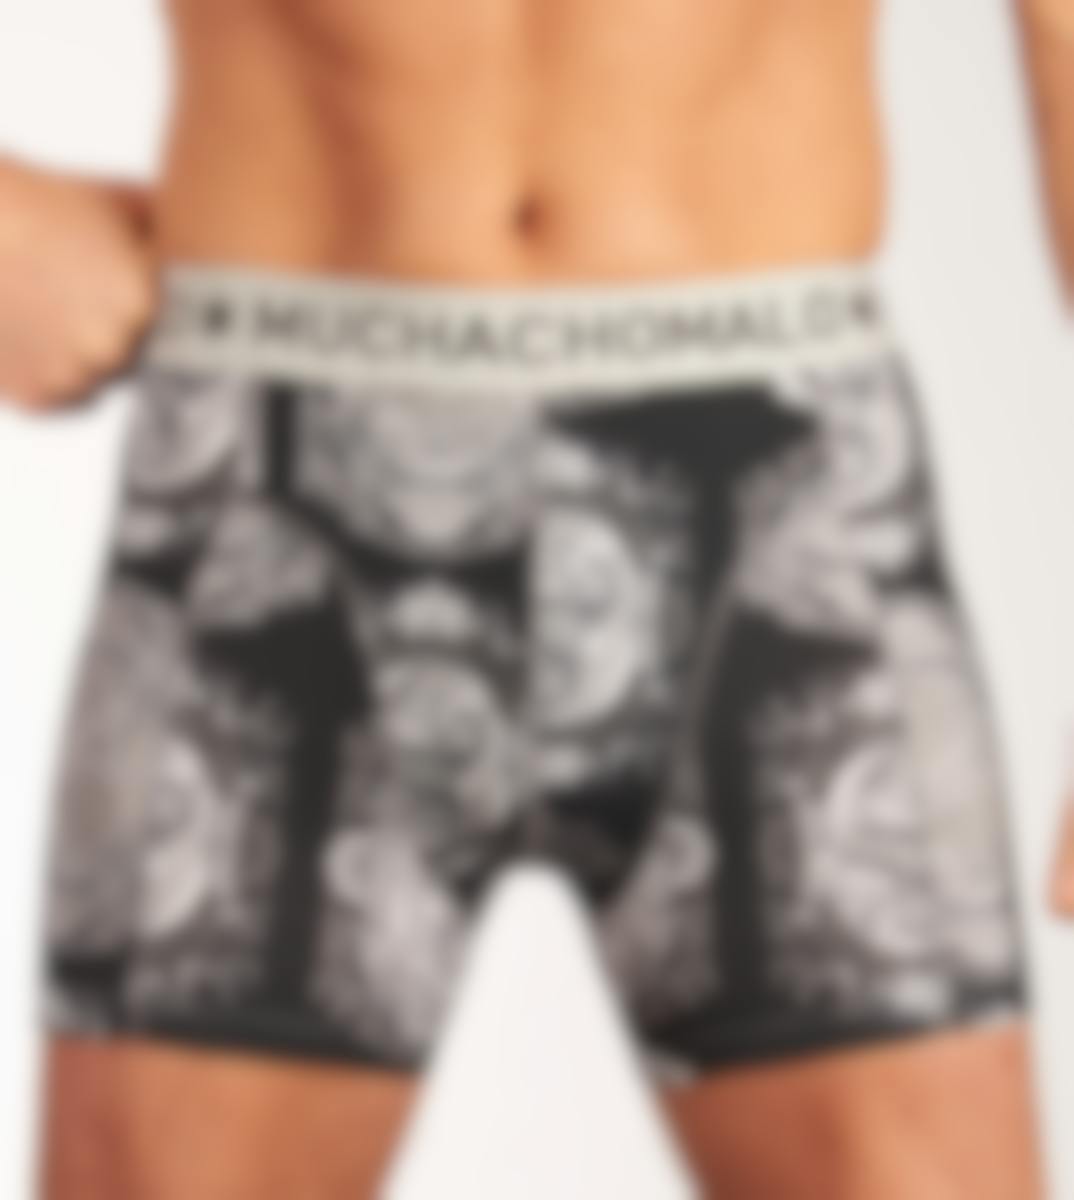 Muchachomalo short 10 pack Boxer Shorts H